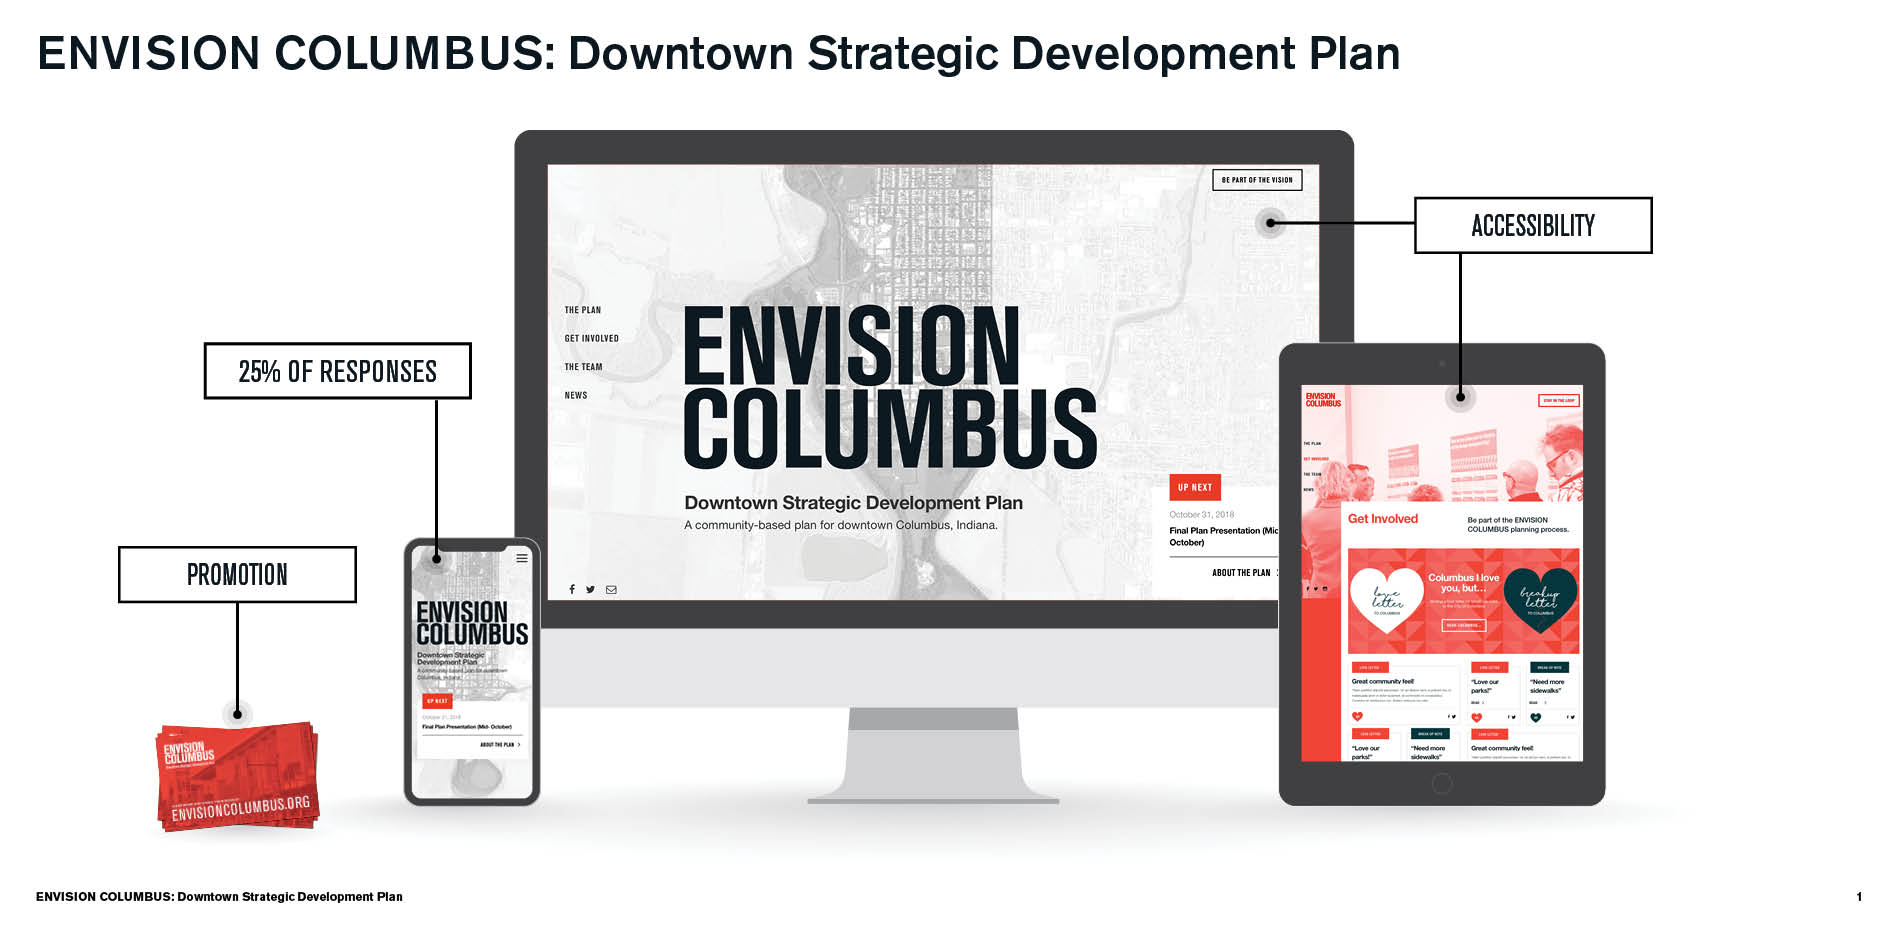 ENVISION COLUMBUS: Downtown Strategic Development Plan